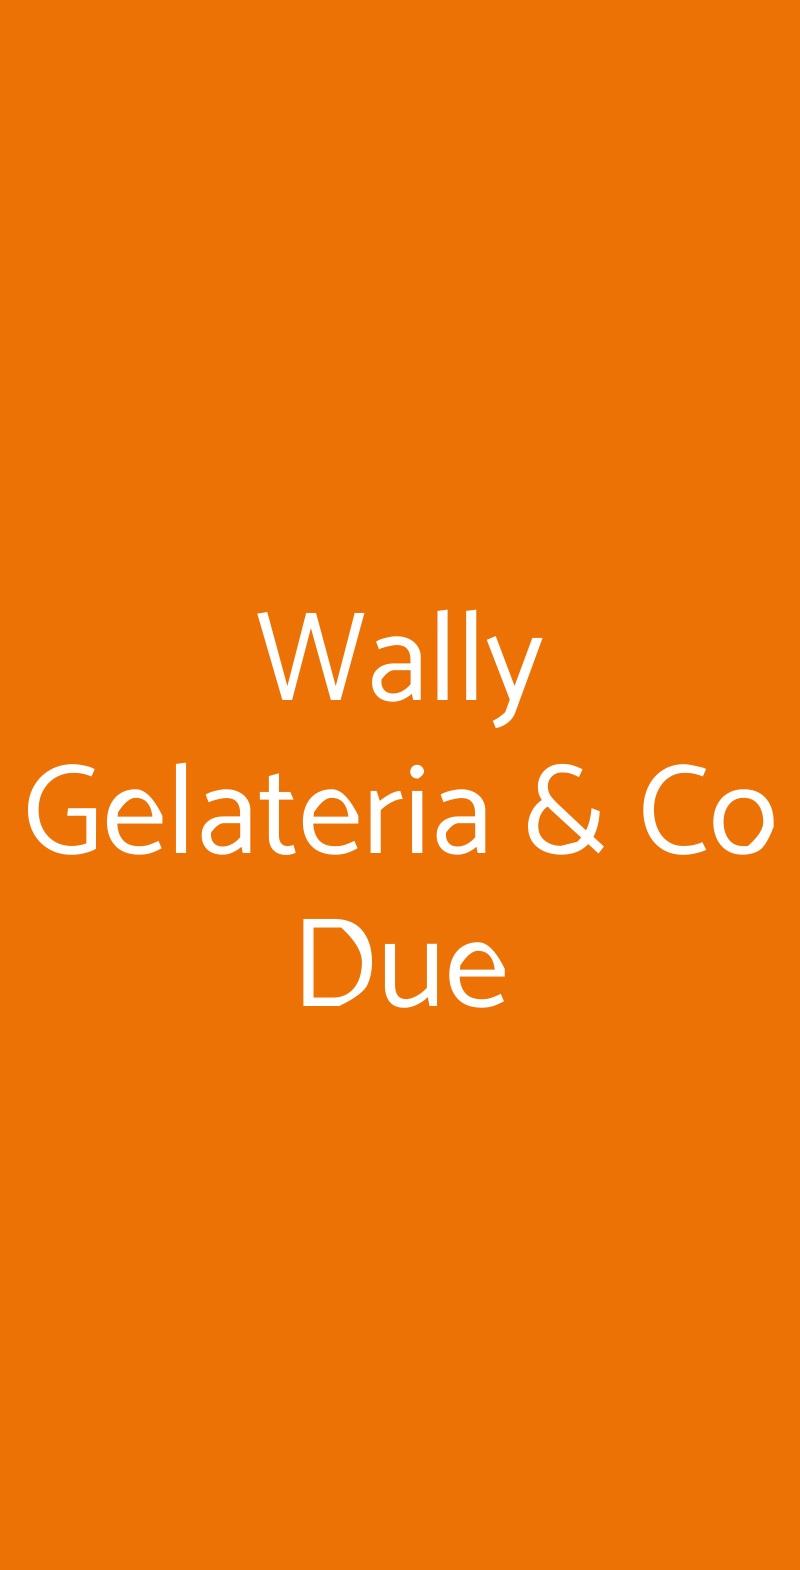 Wally Gelateria & Co Due Milano menù 1 pagina